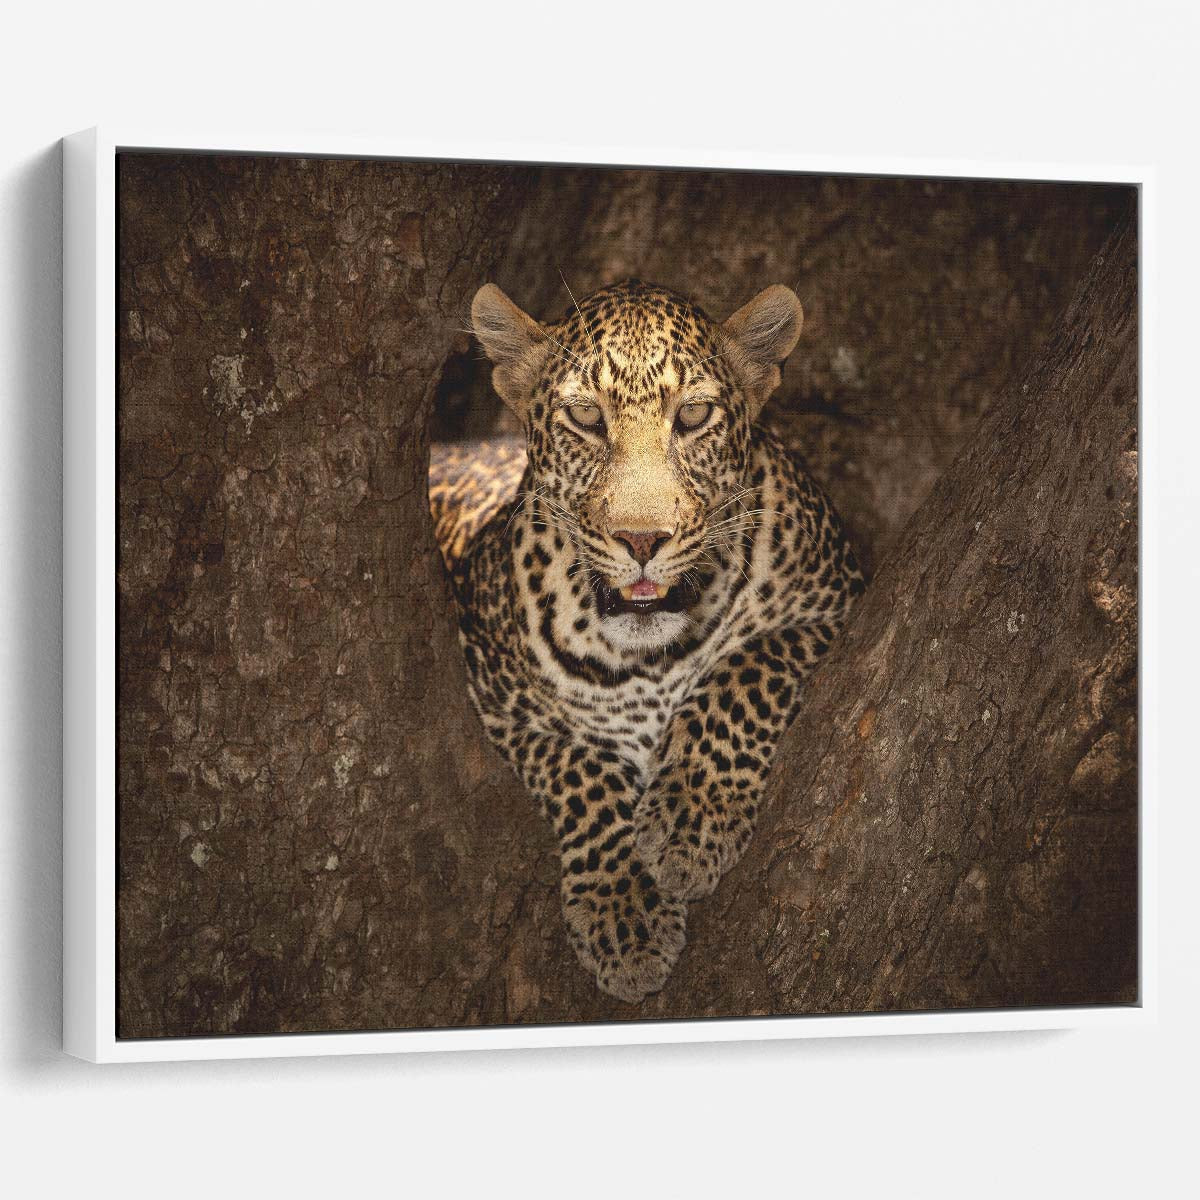 Masai Mara Leopard Camouflage Safari Wall Art by Luxuriance Designs. Made in USA.